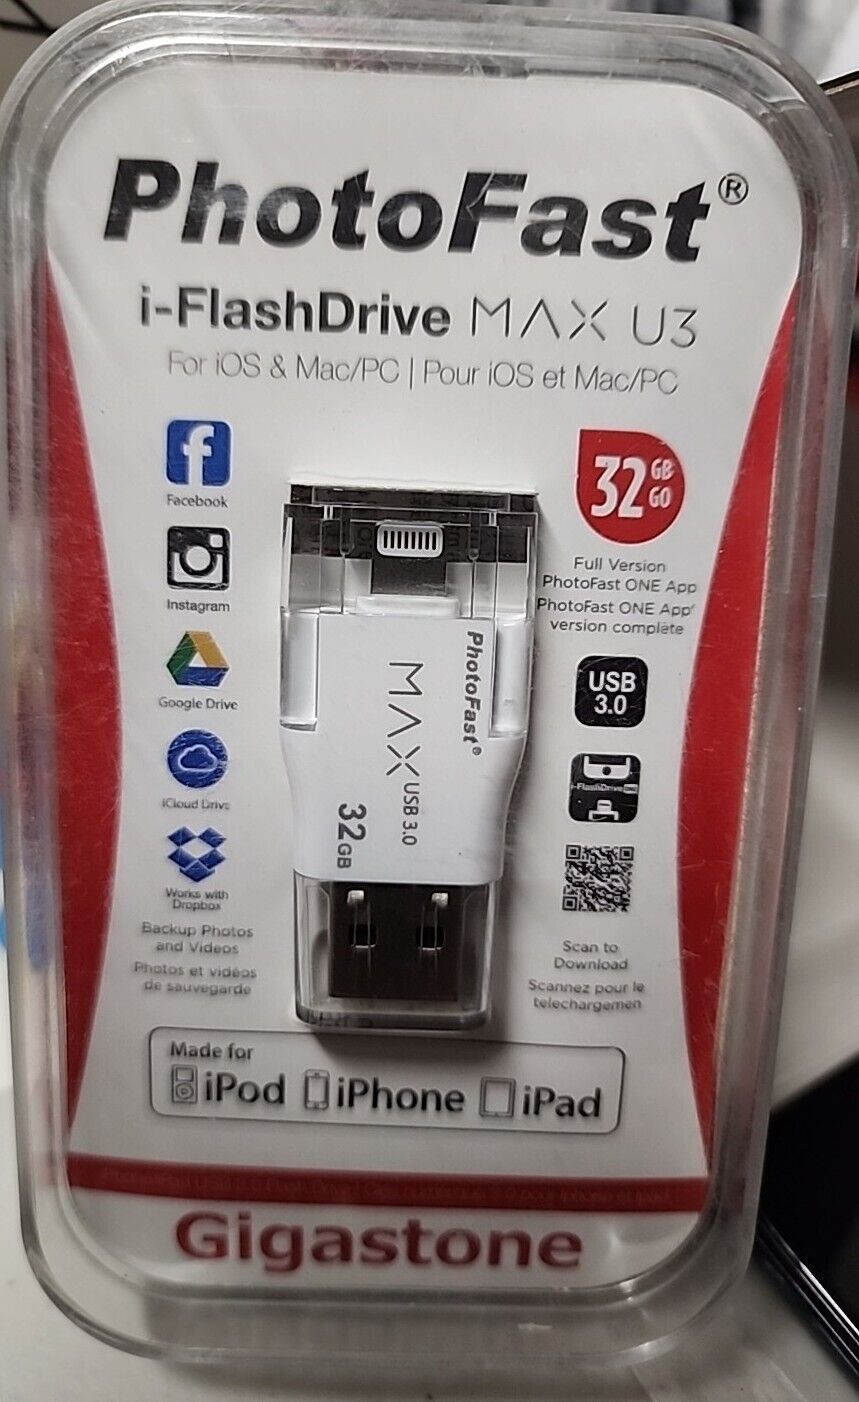 Photofast Gigastone Usb 3.0 I-Flashdrive Max U3 For Ios & Mac/PC 32Gb - Open Box